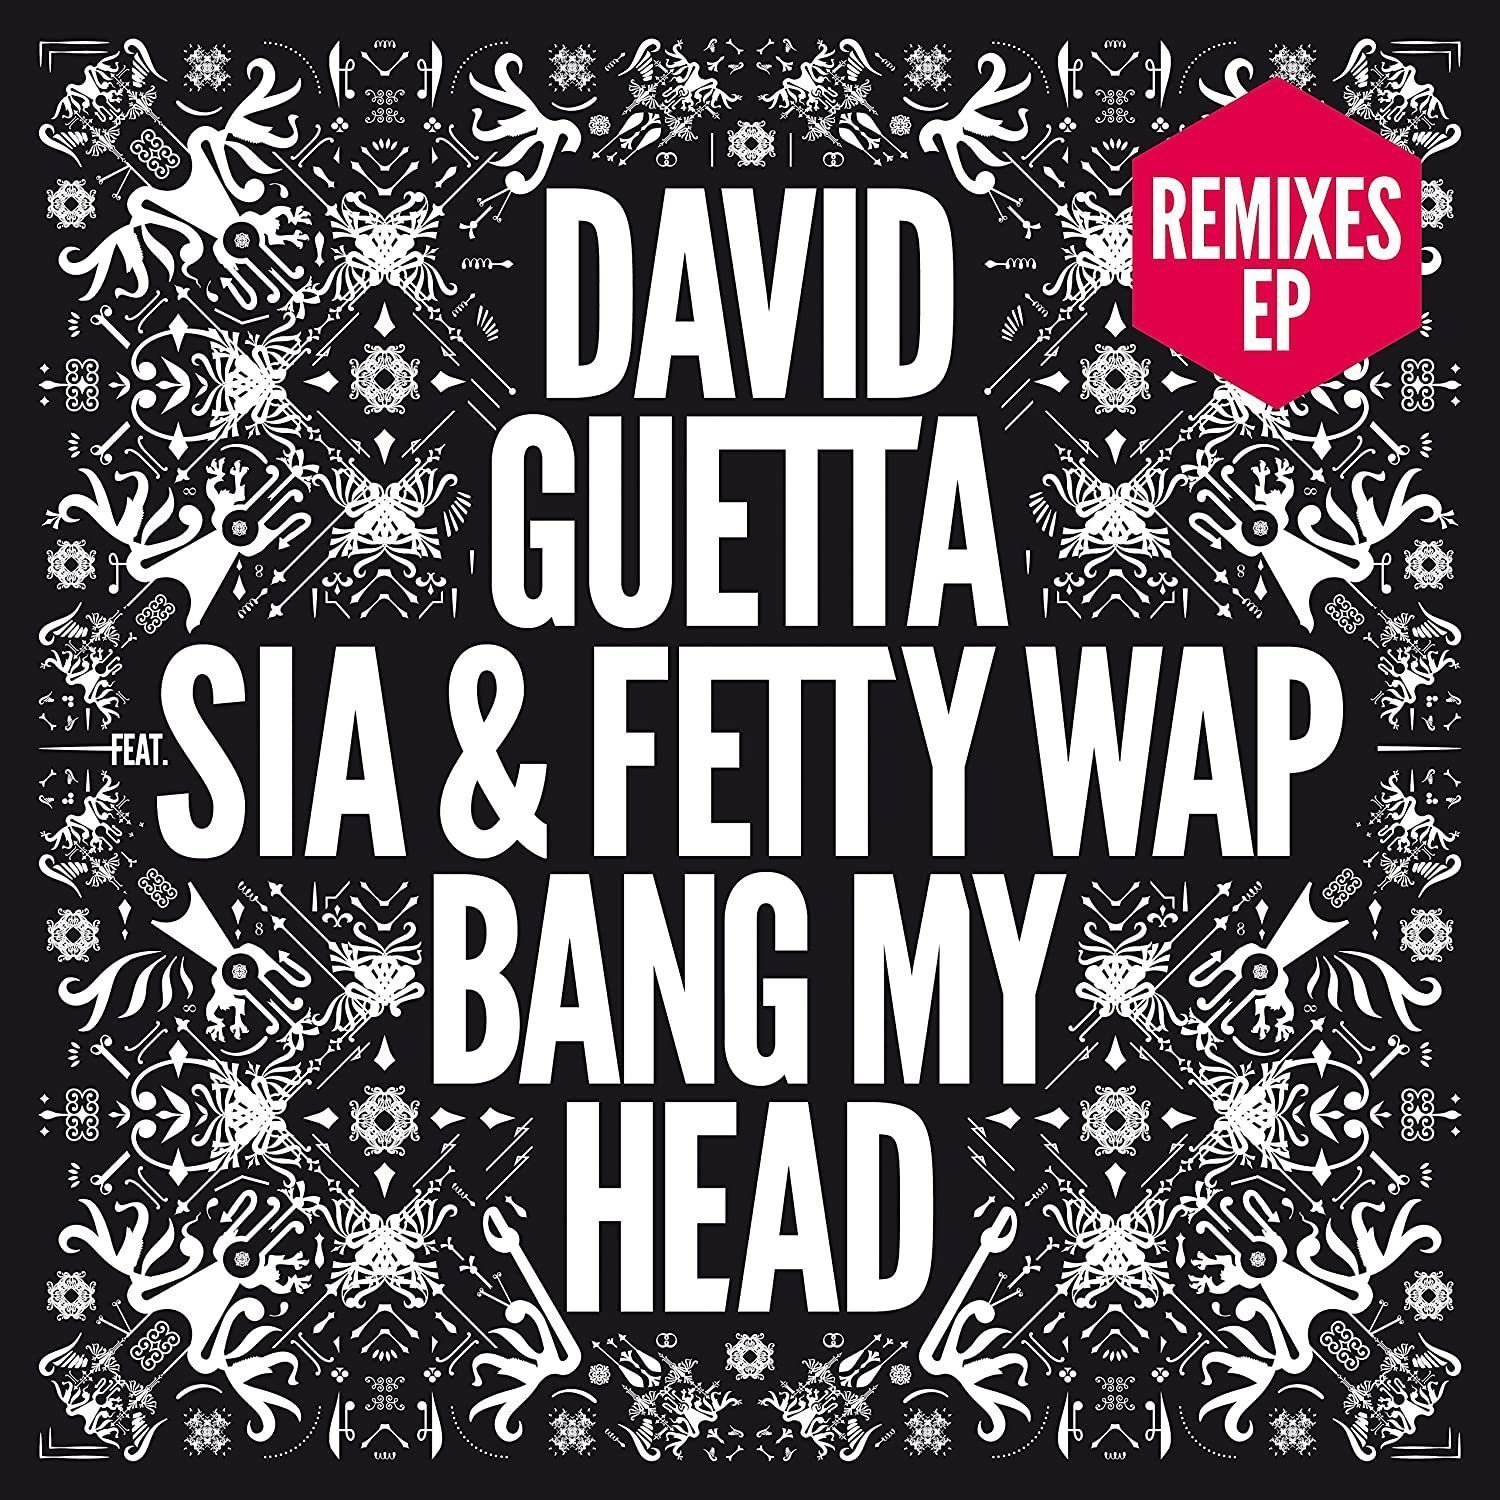 Vinyl Record David Guetta - Bang My Head (Feat. Sia & Fetty Wap) (LP)